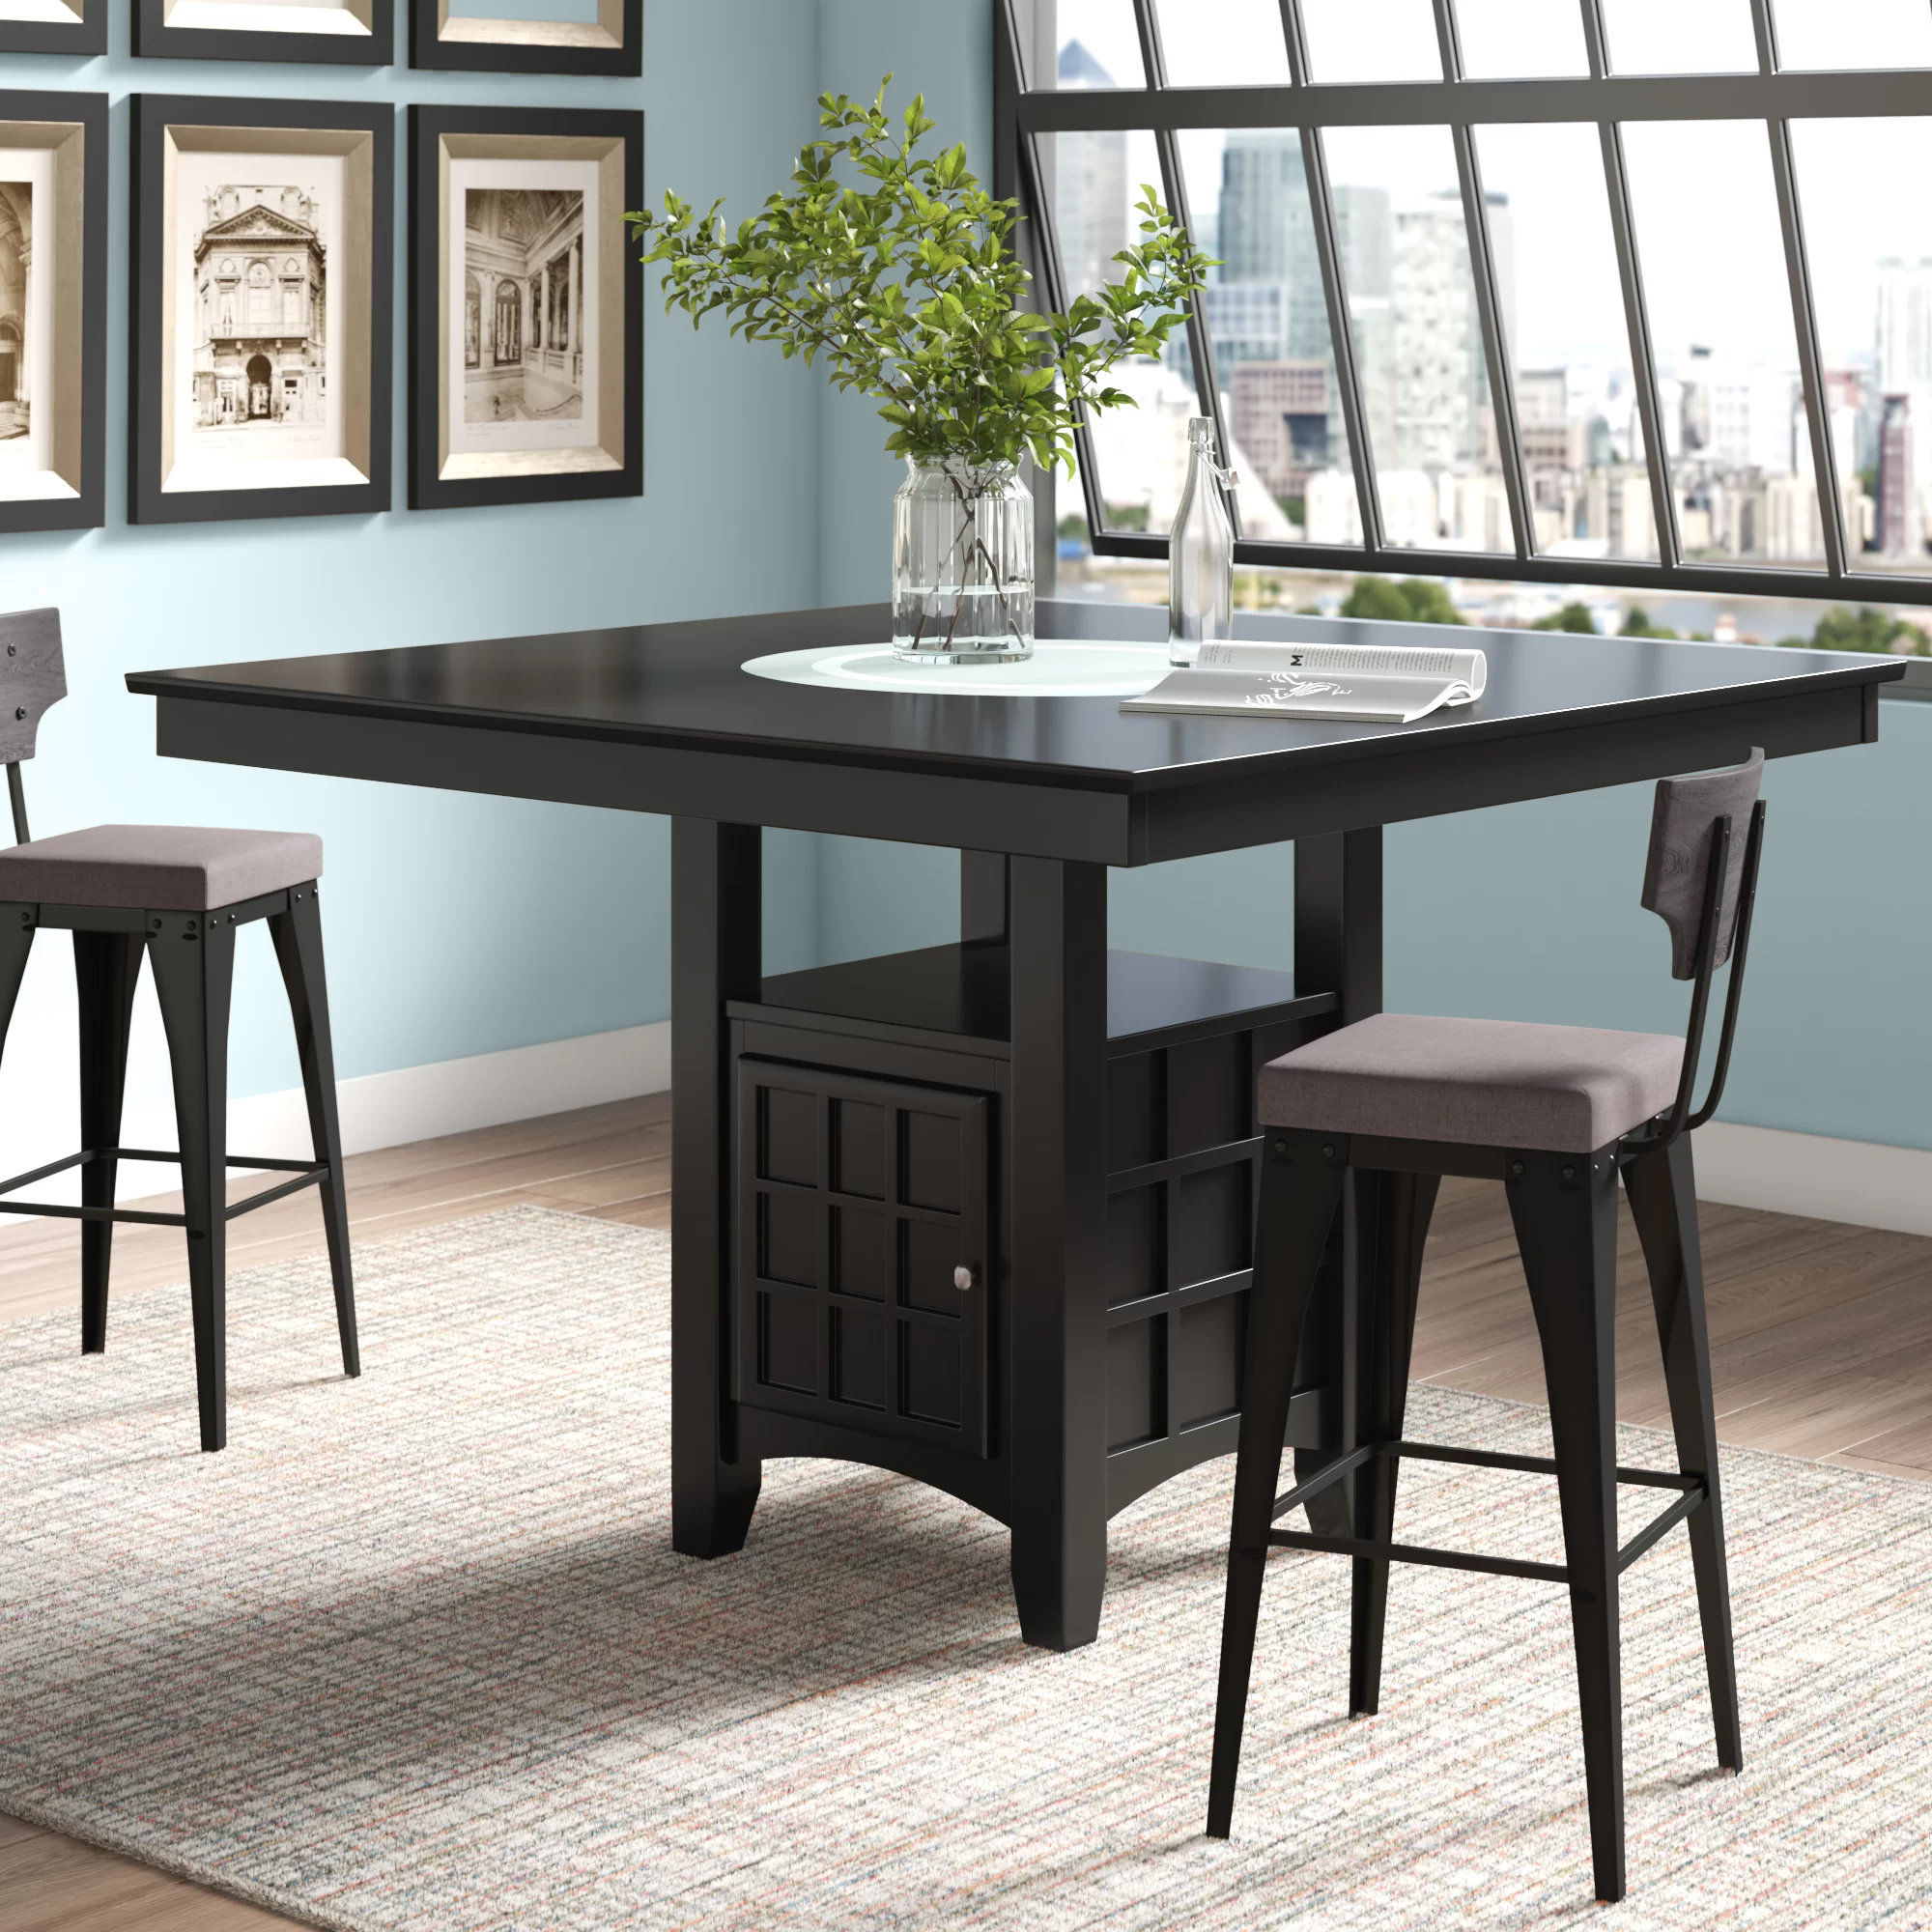 Millwood Pines Landgraf Counter Height Pedestal Dining Table Reviews Wayfair